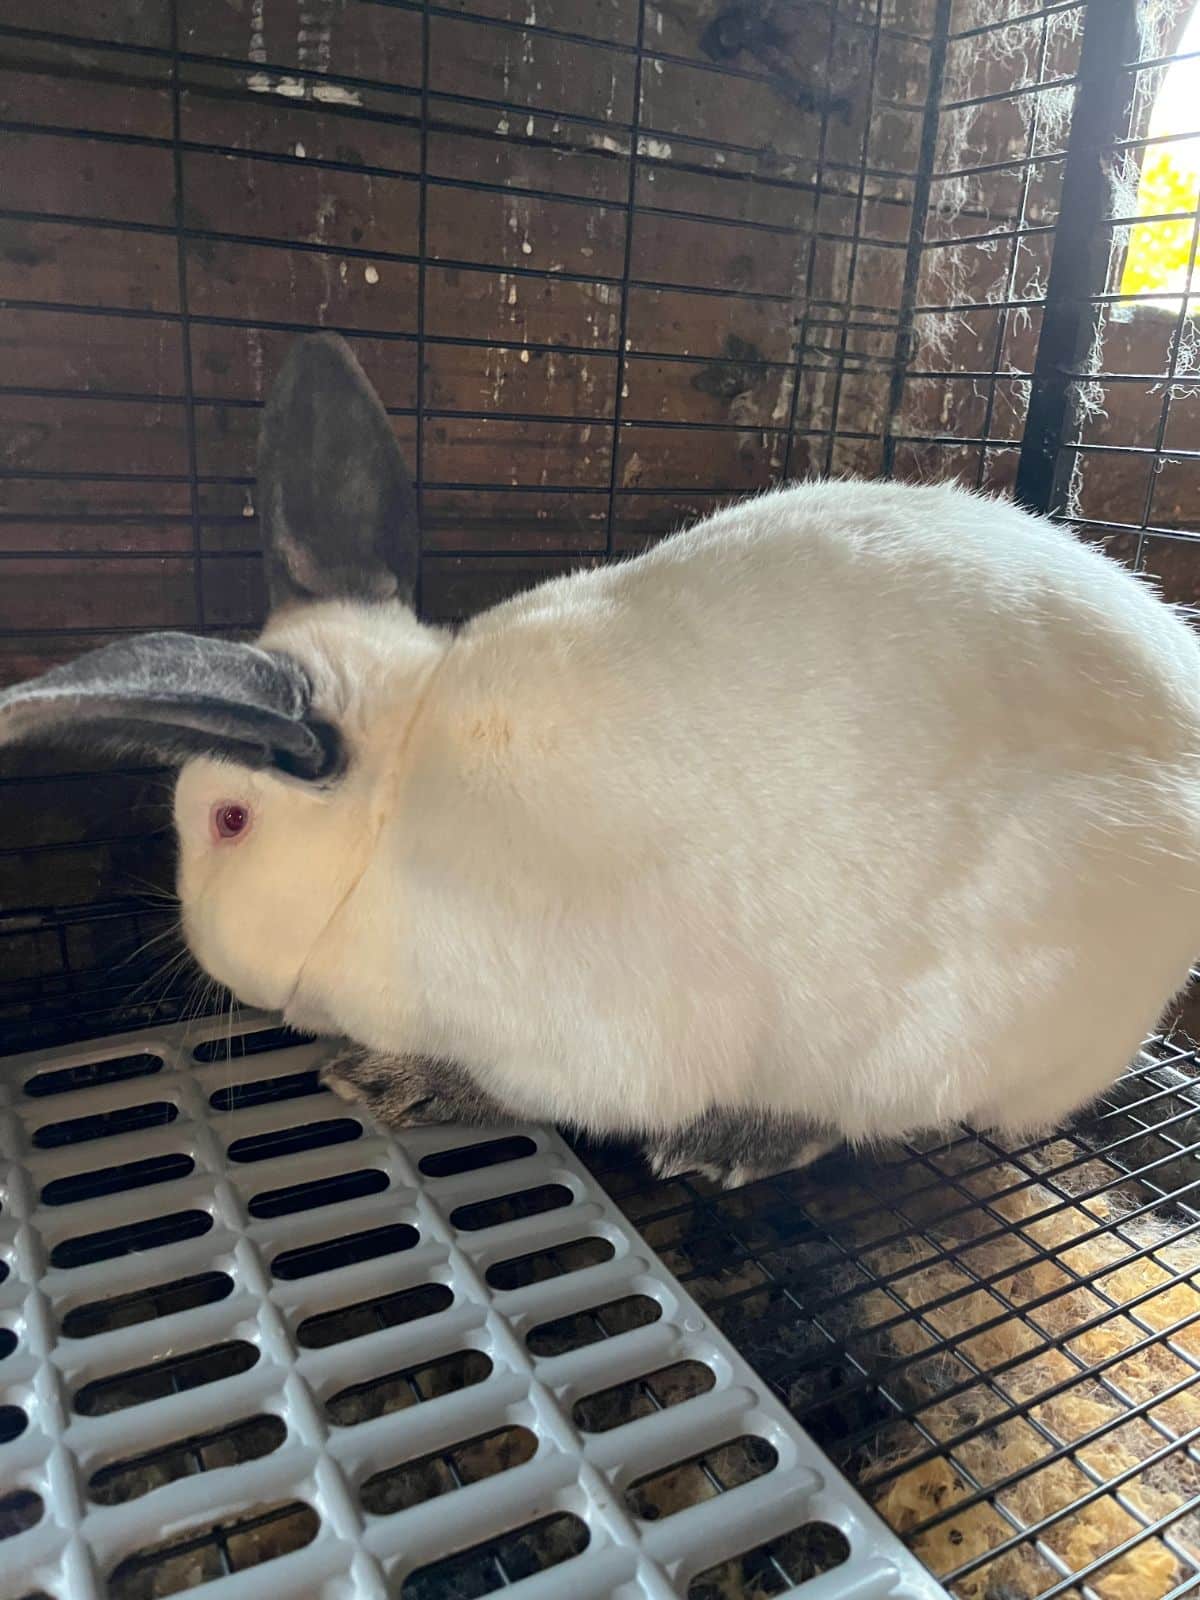 A bashful meat rabbit buck in a cage corner